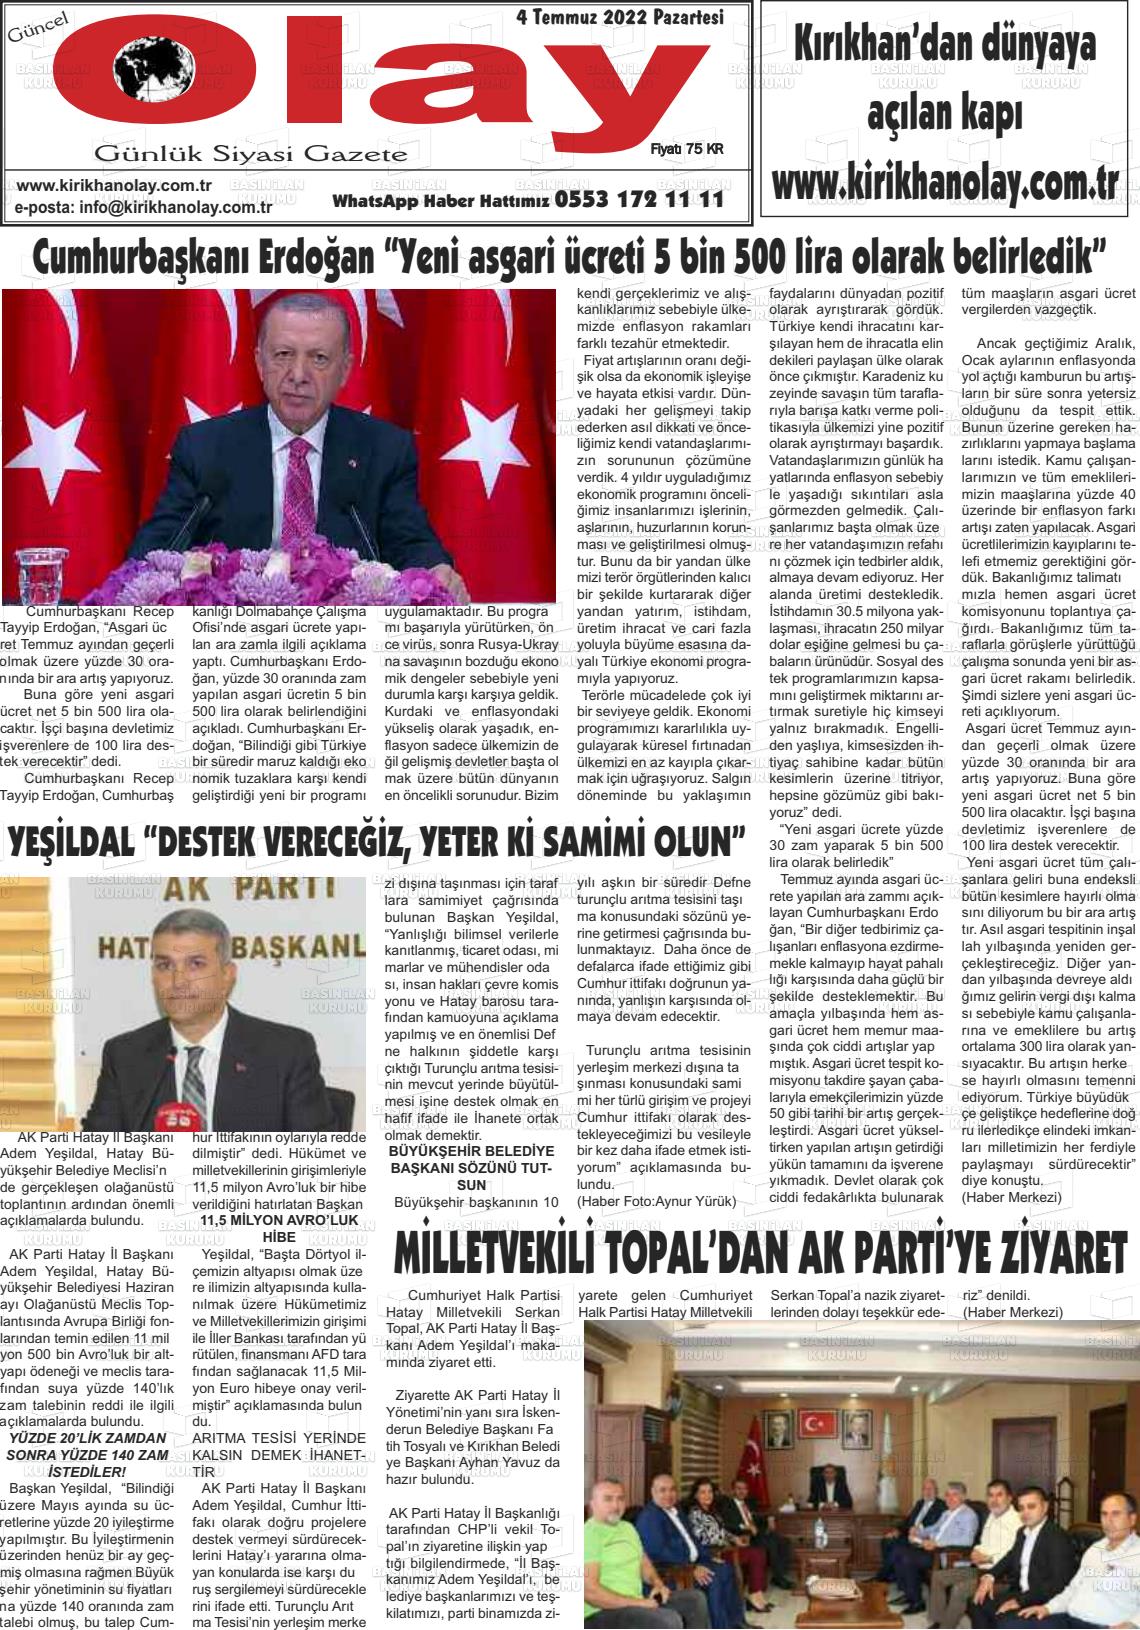 04 Temmuz 2022 Kırıkhan Olay Gazete Manşeti